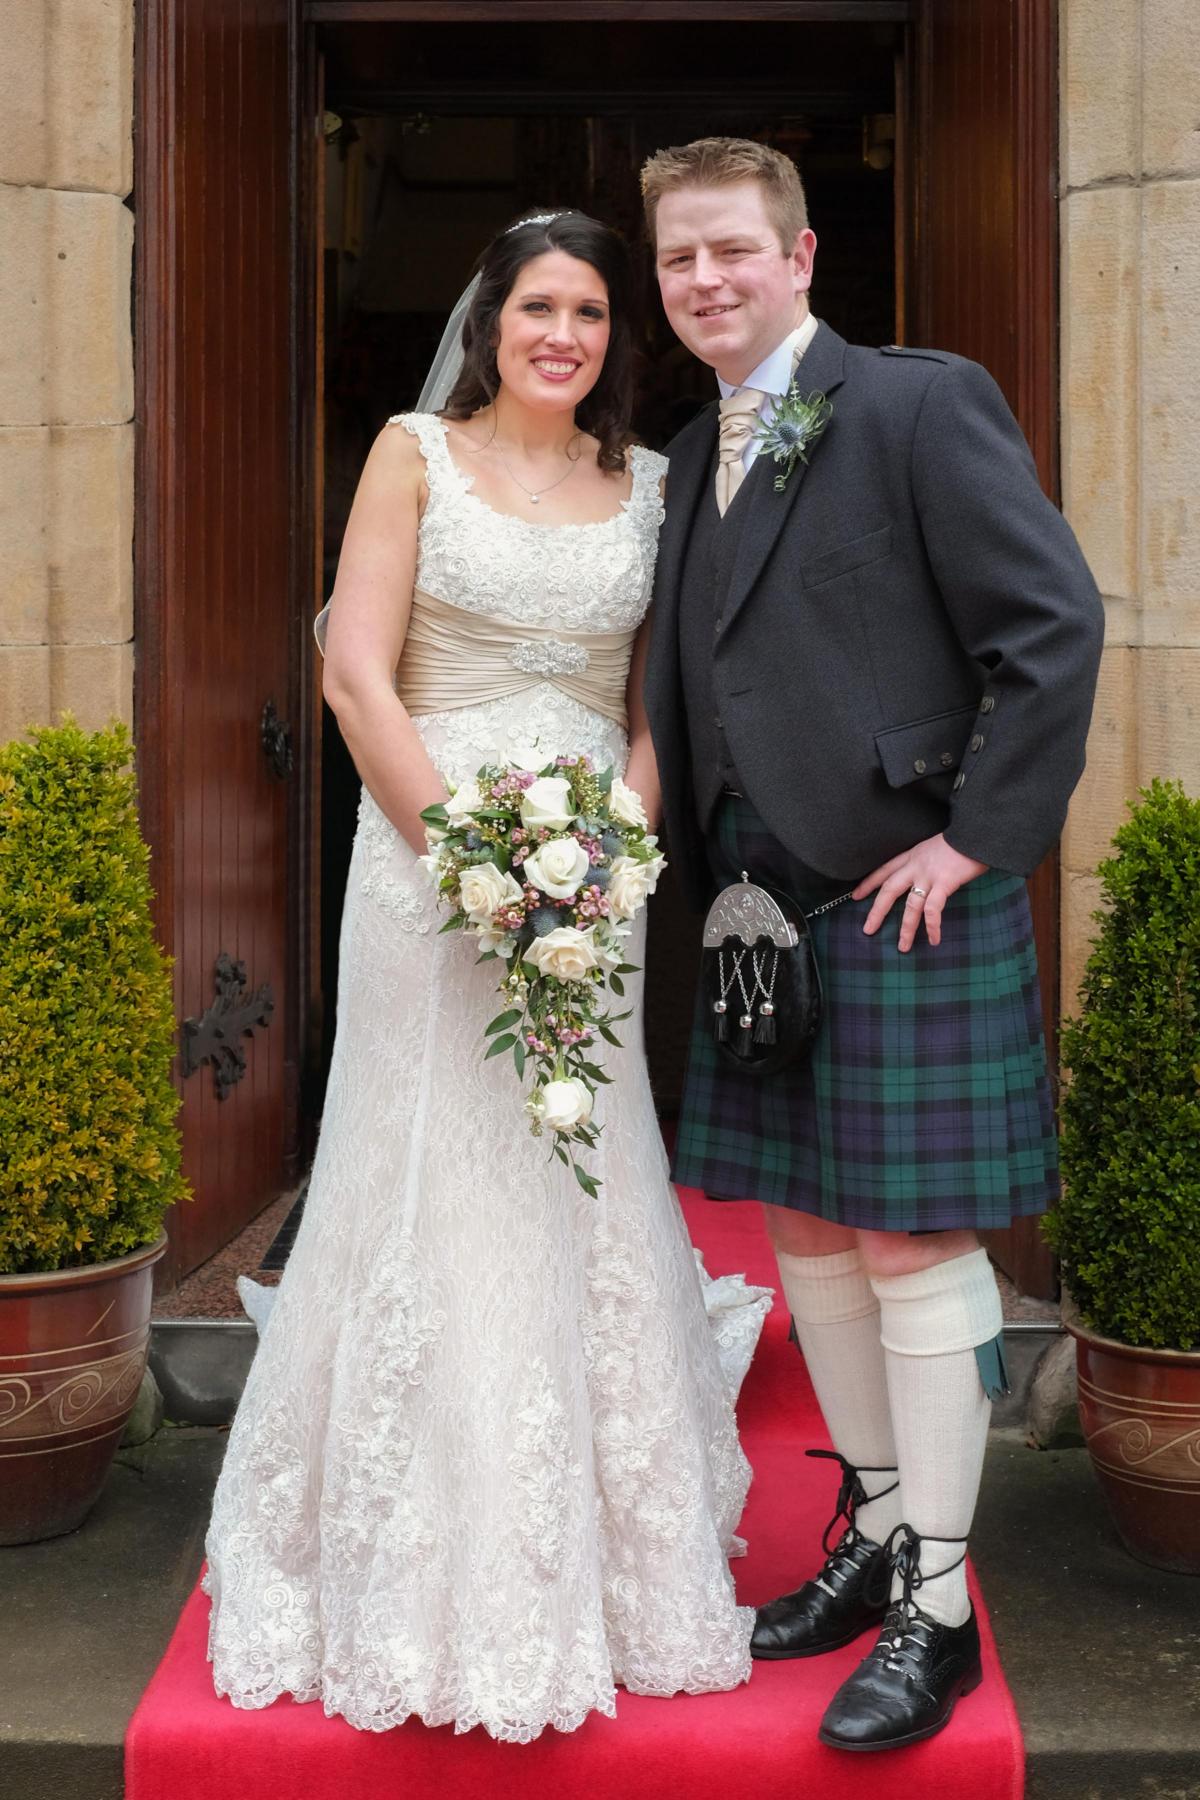 Katherine Lawrie, of Kinross, married Andrew Craig, Banbridge, Co. Down at Inchyra Grange Hotel, Polmont, Falkirk